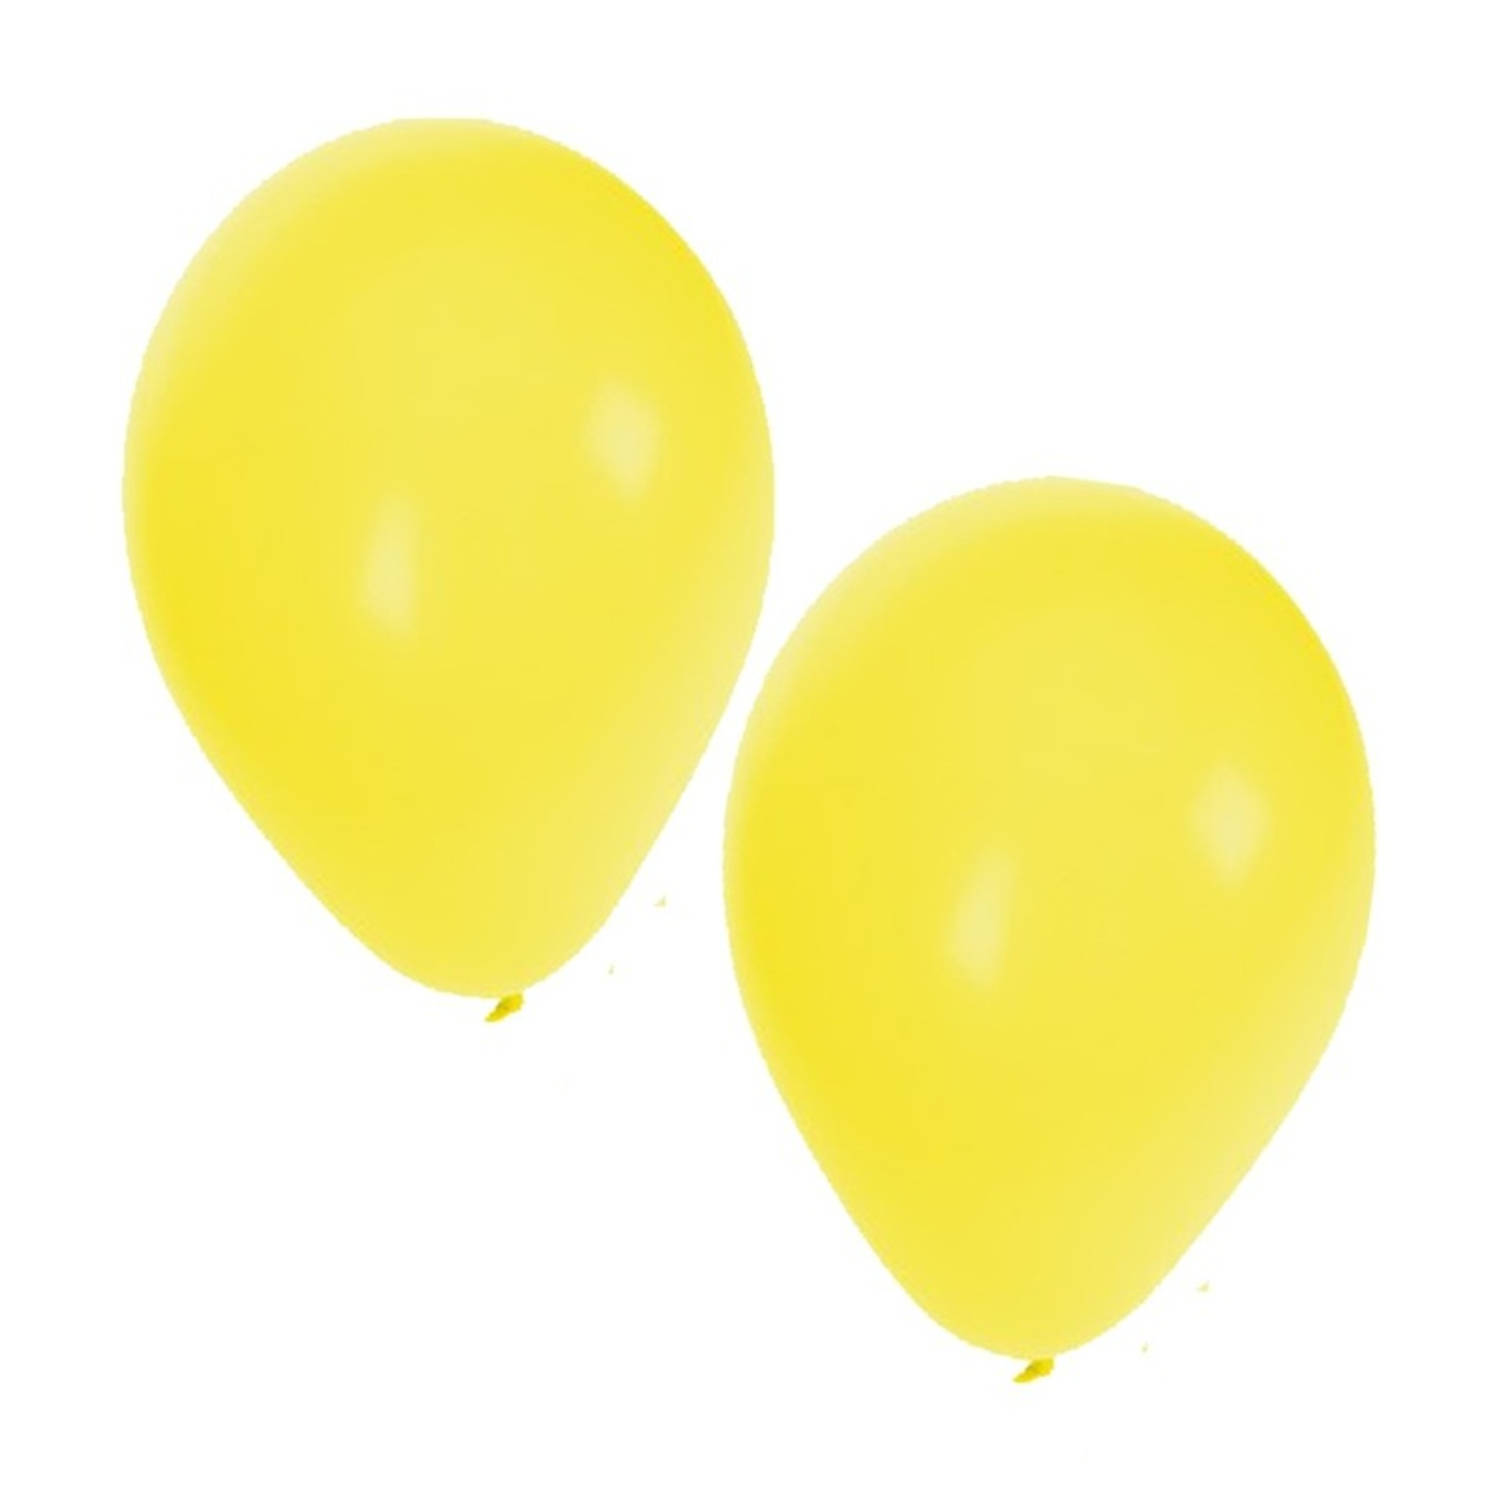 25x stuks gele party ballonnen van 27 cm - Ballonnen